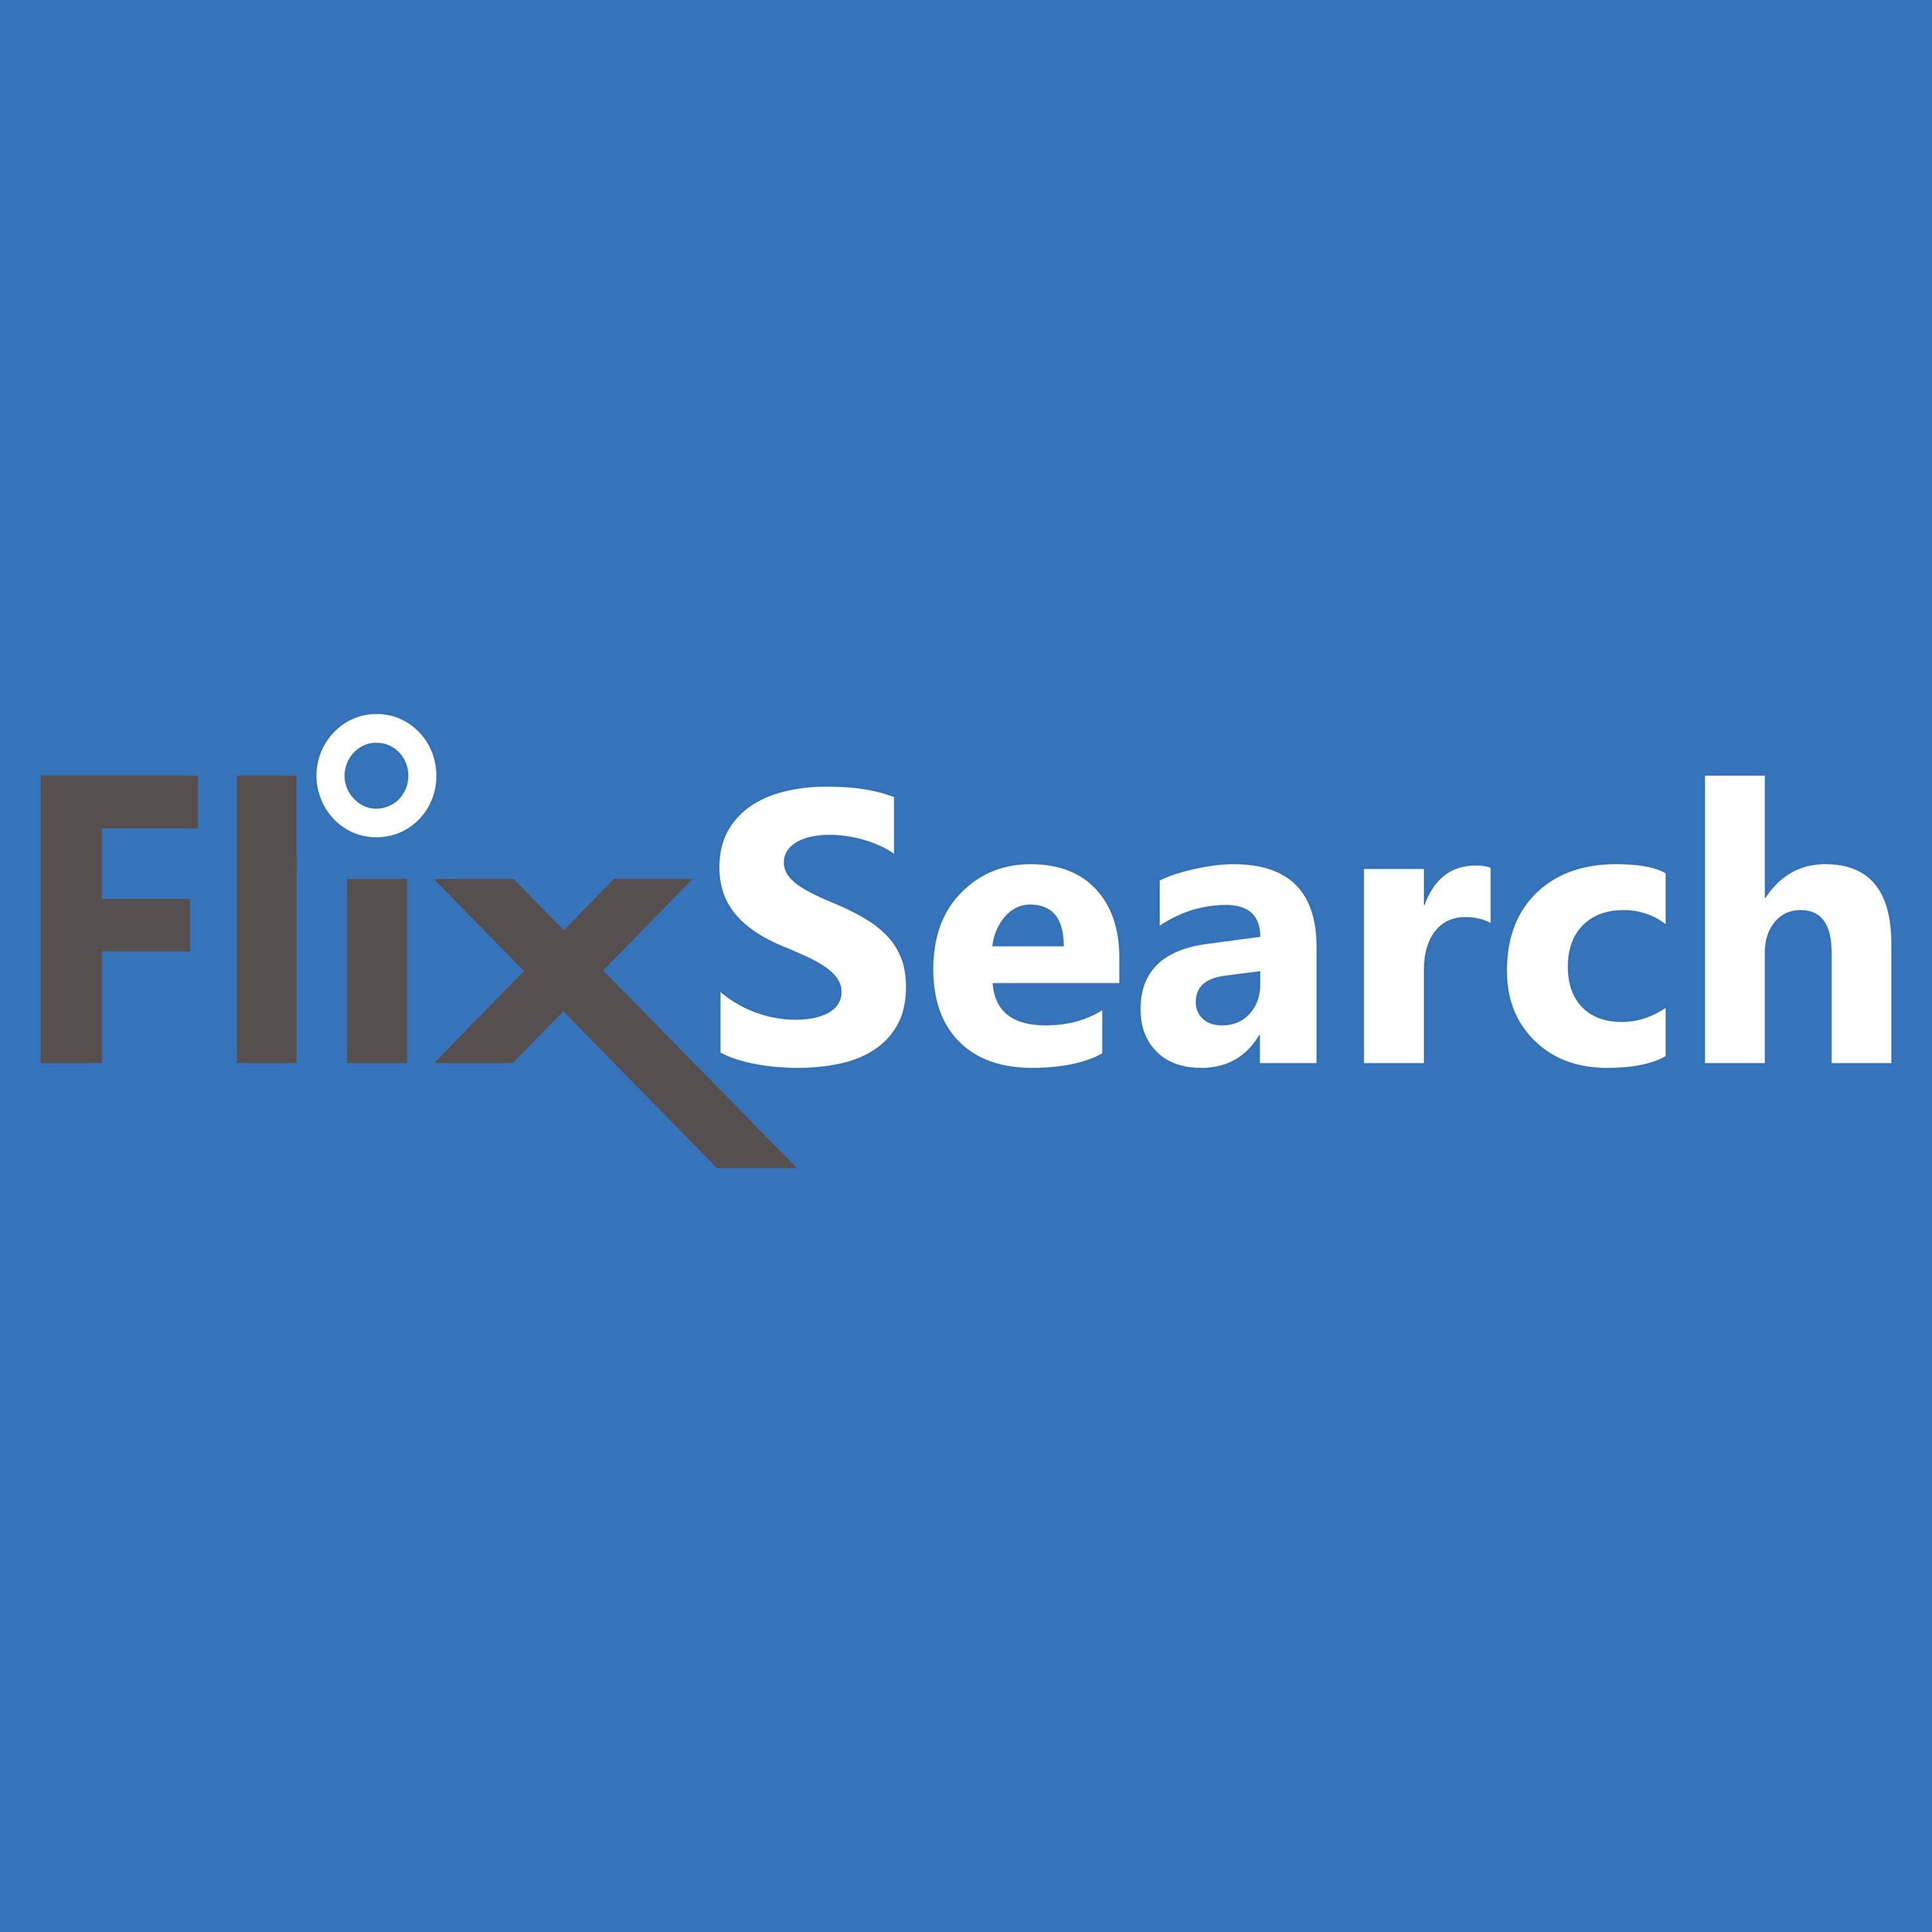 FlixSearch